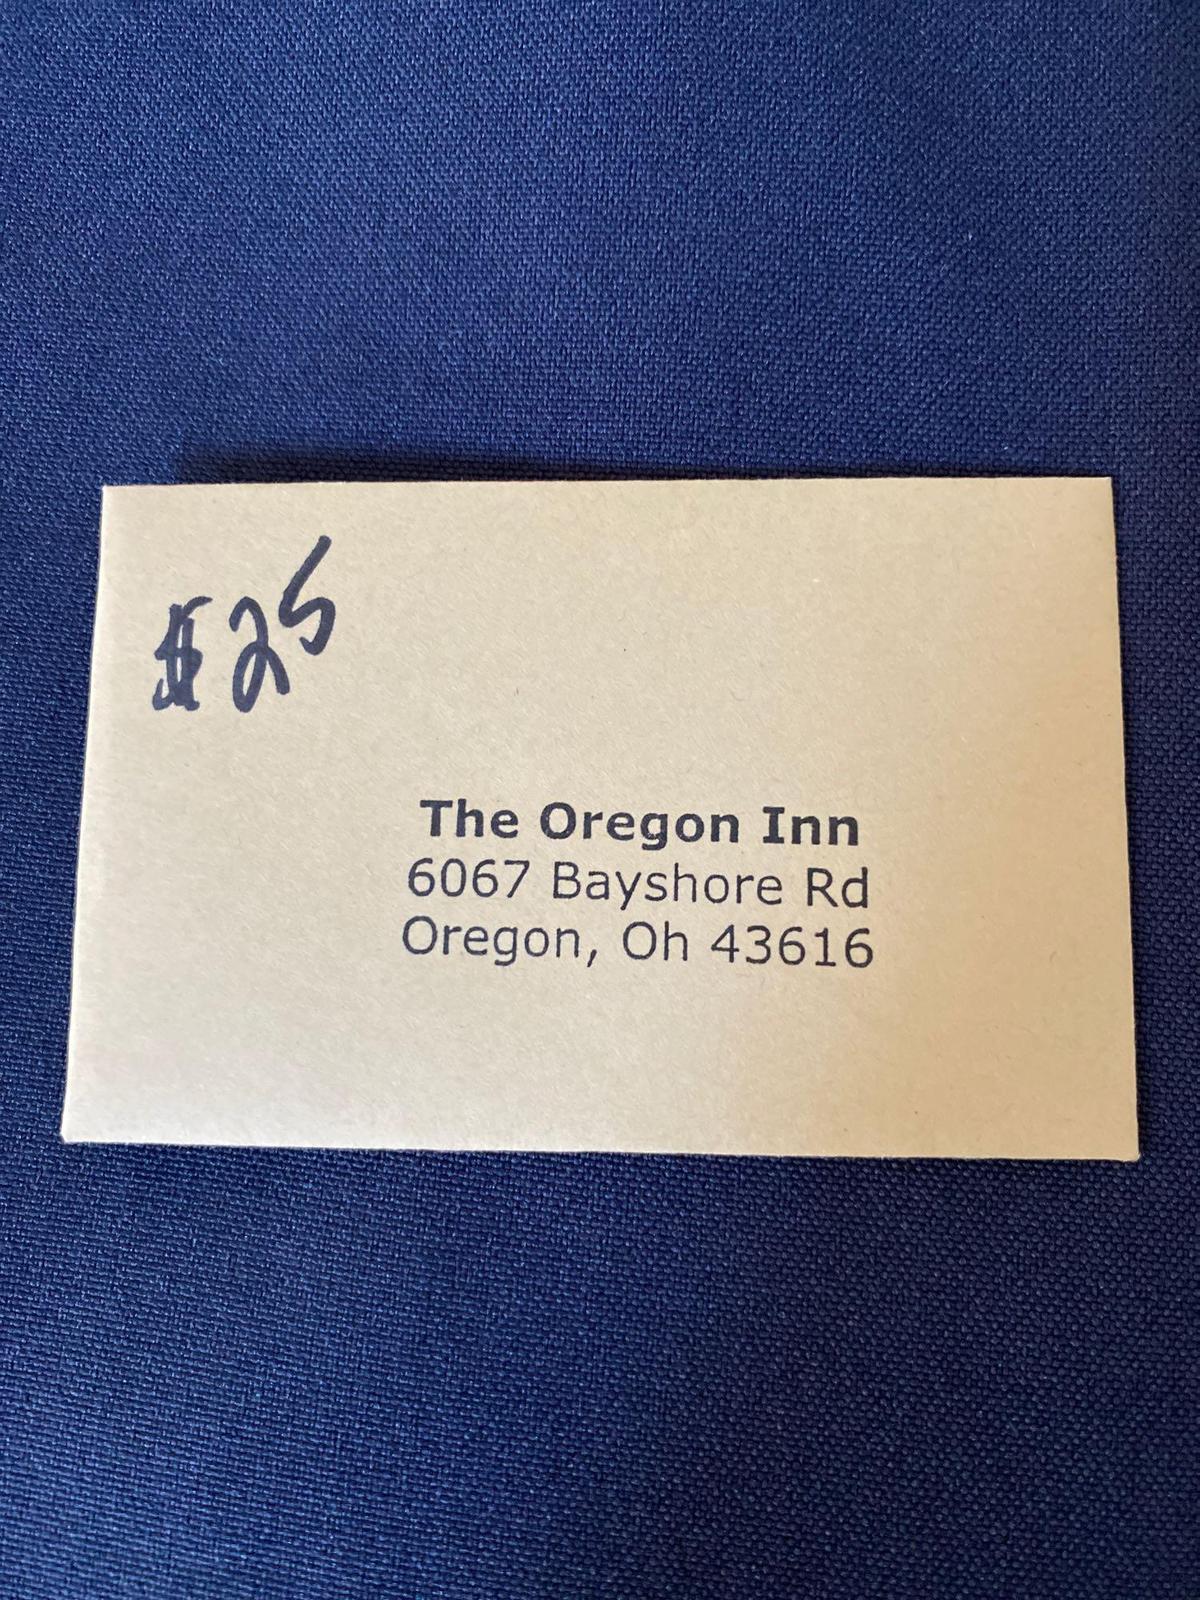 The Oregon Inn Gift Card $25